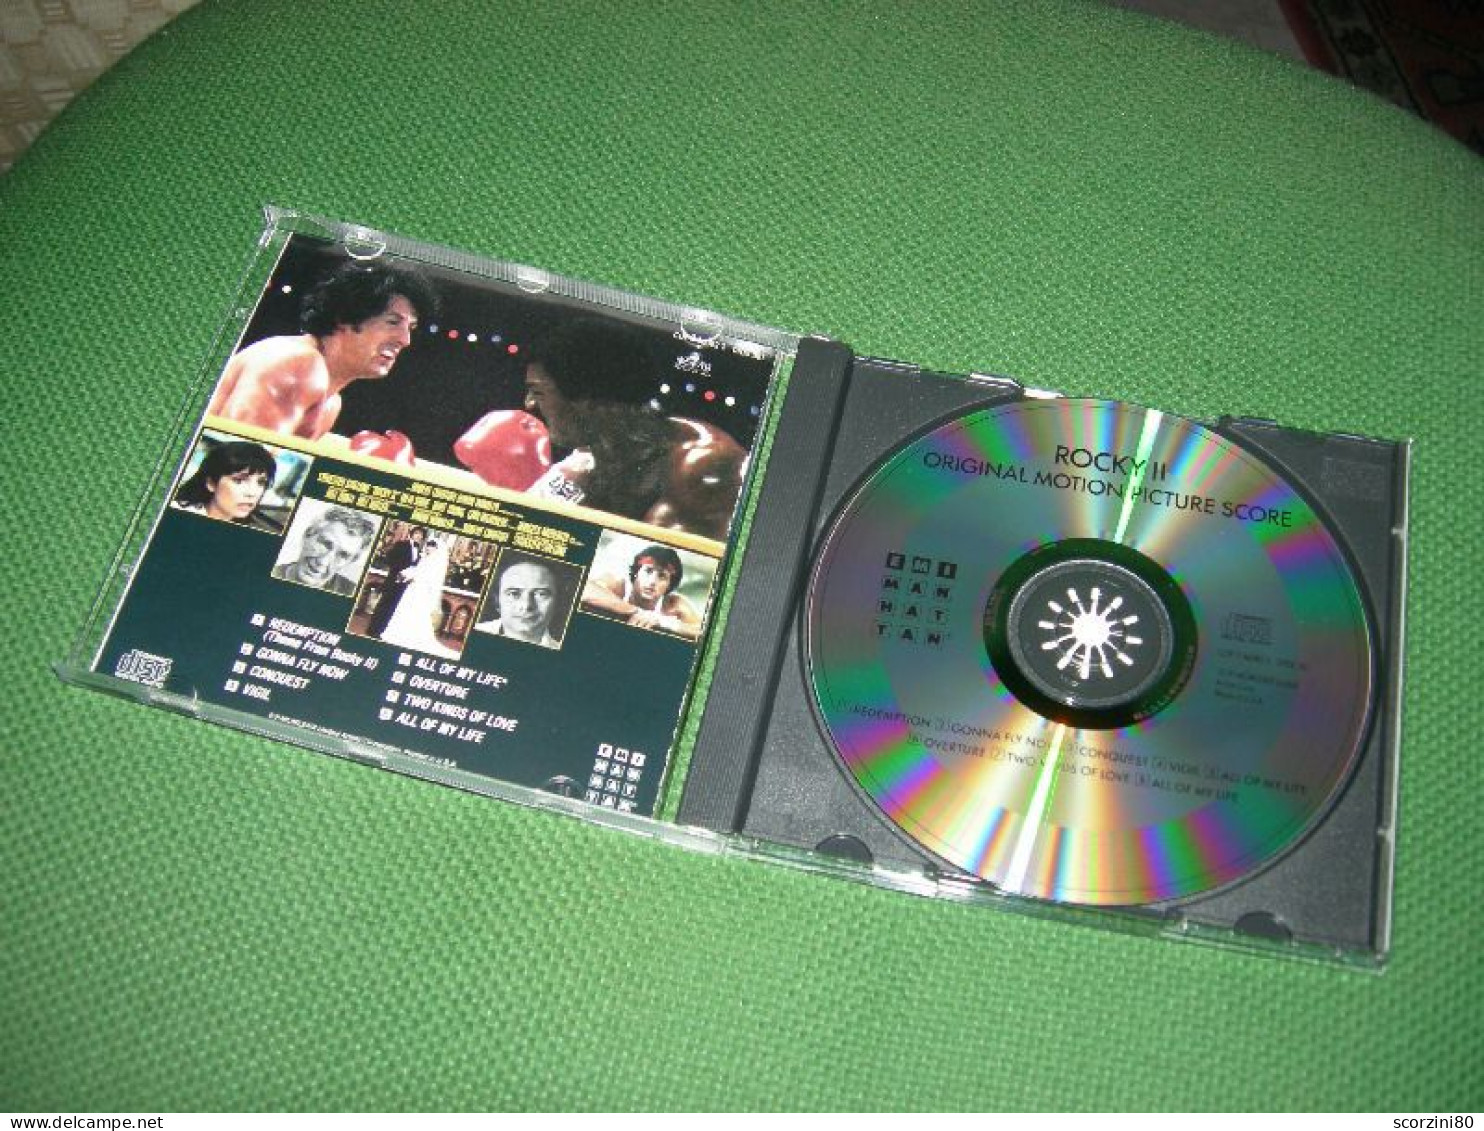 CD Audio SOUNDTRACK Rocky II ORIGINALE - Musica Di Film